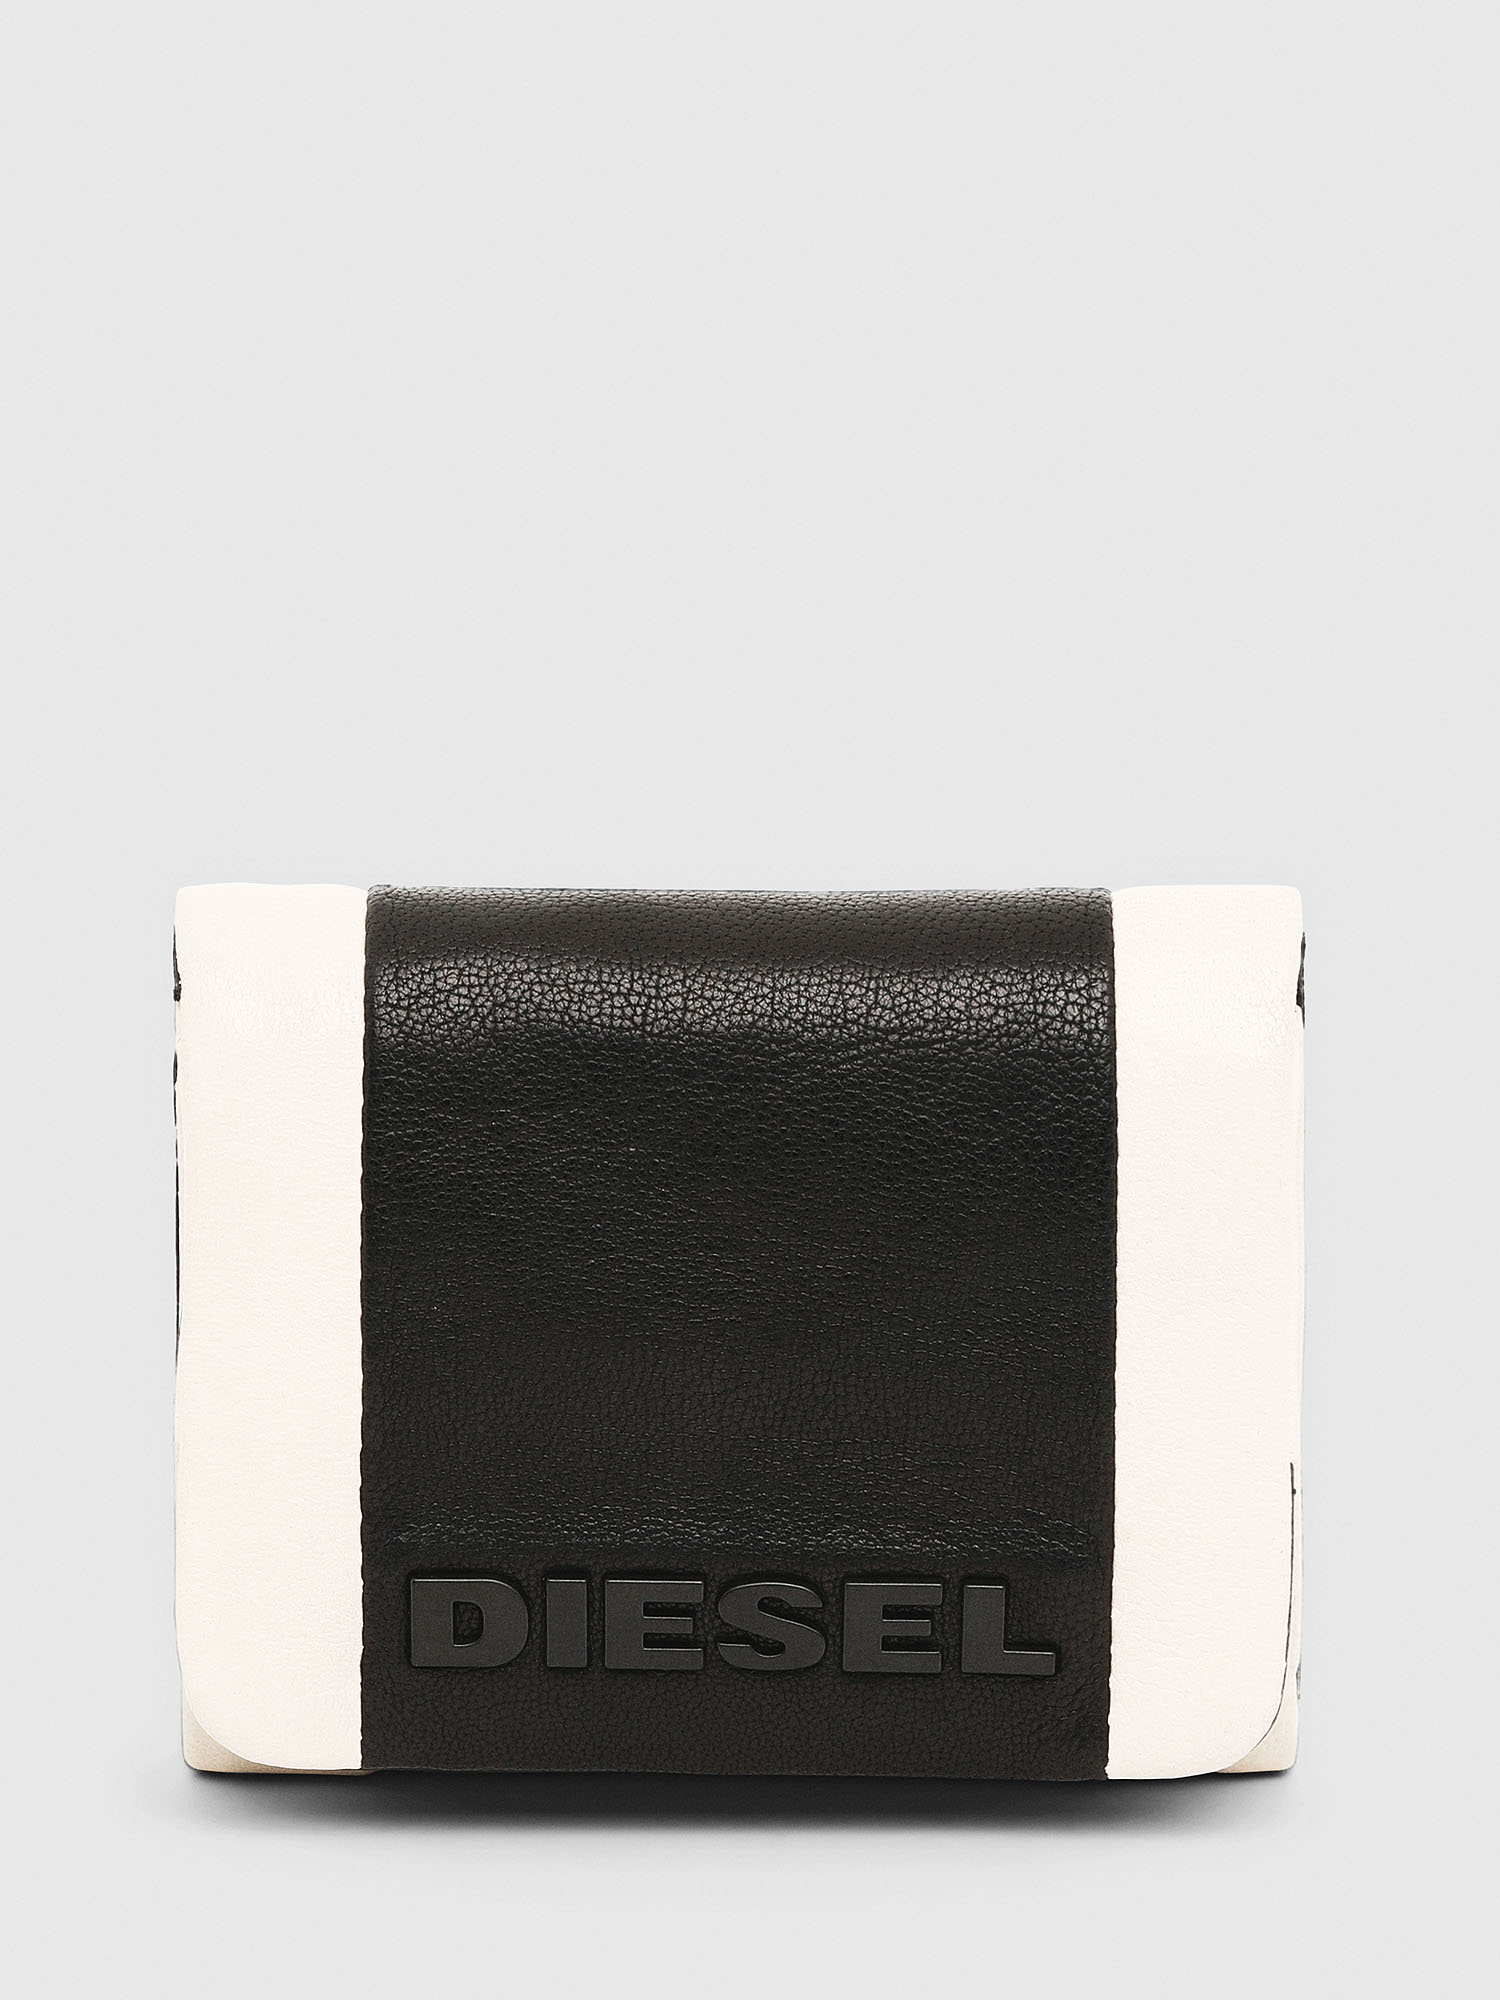 Diesel - LORETTA, Black/White - Image 1